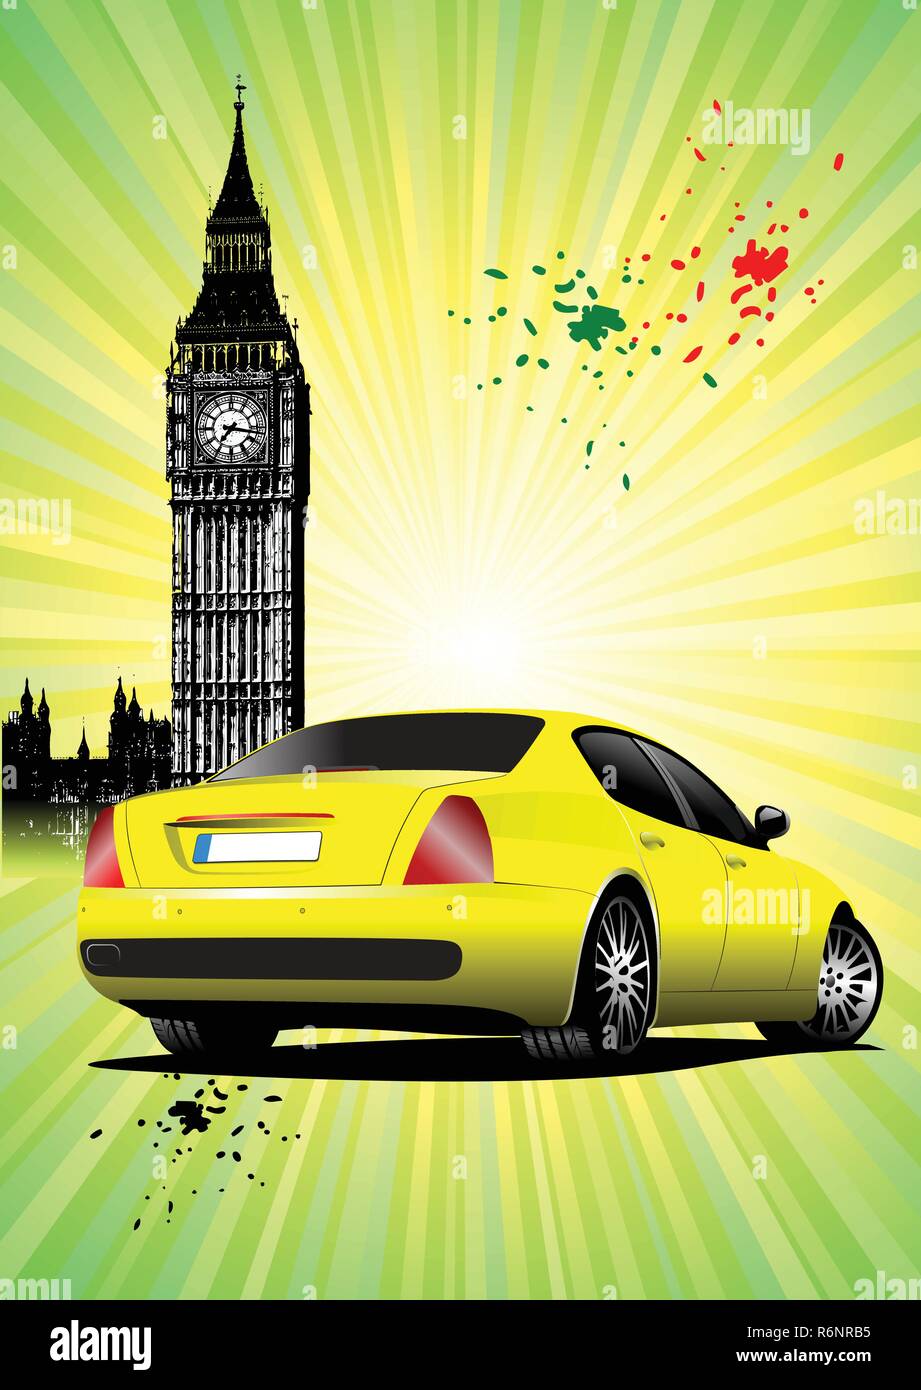 London Poster mit gelben Auto Bild. Vector Illustration Stock Vektor